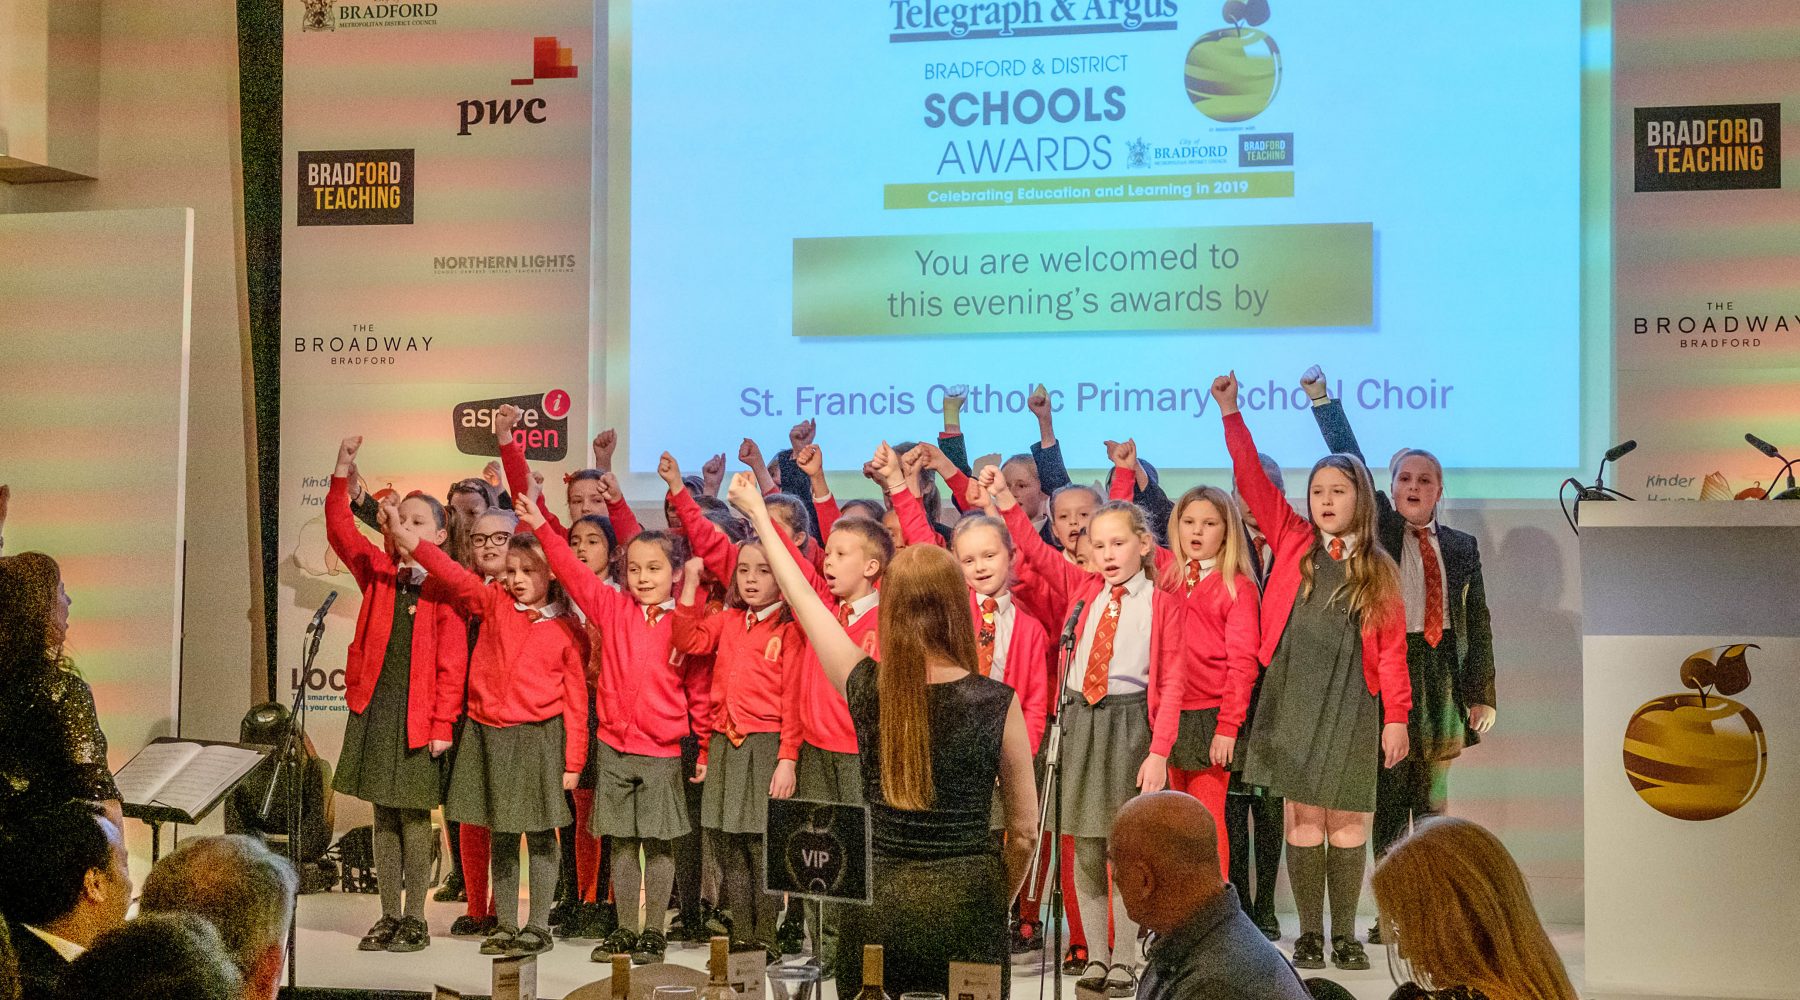 Schools Awards 2019